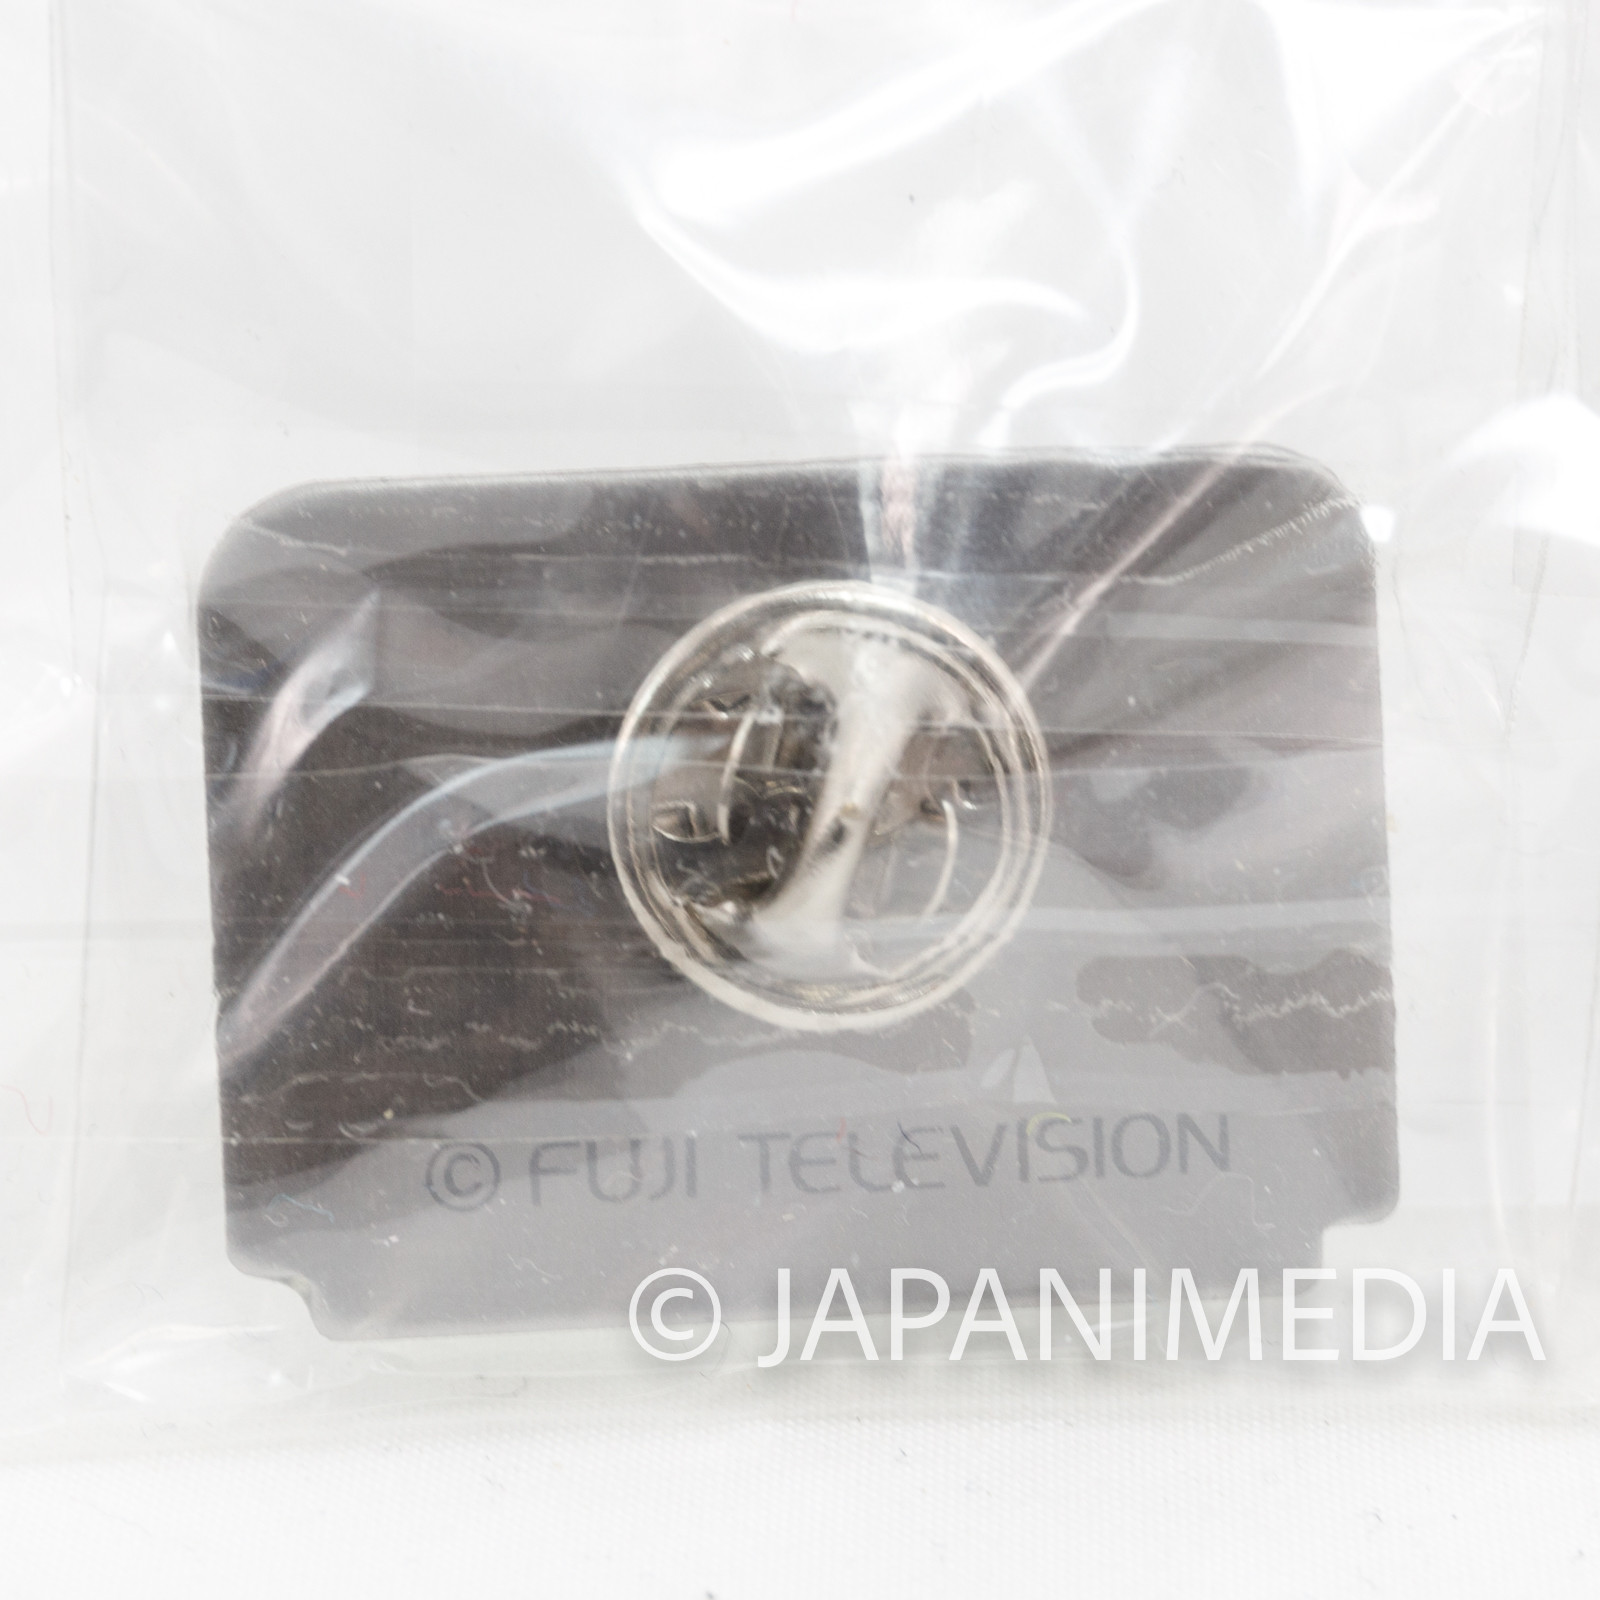 Game Center CX Character Pins 2pc Set #3 JAPAN ARINO KACHO